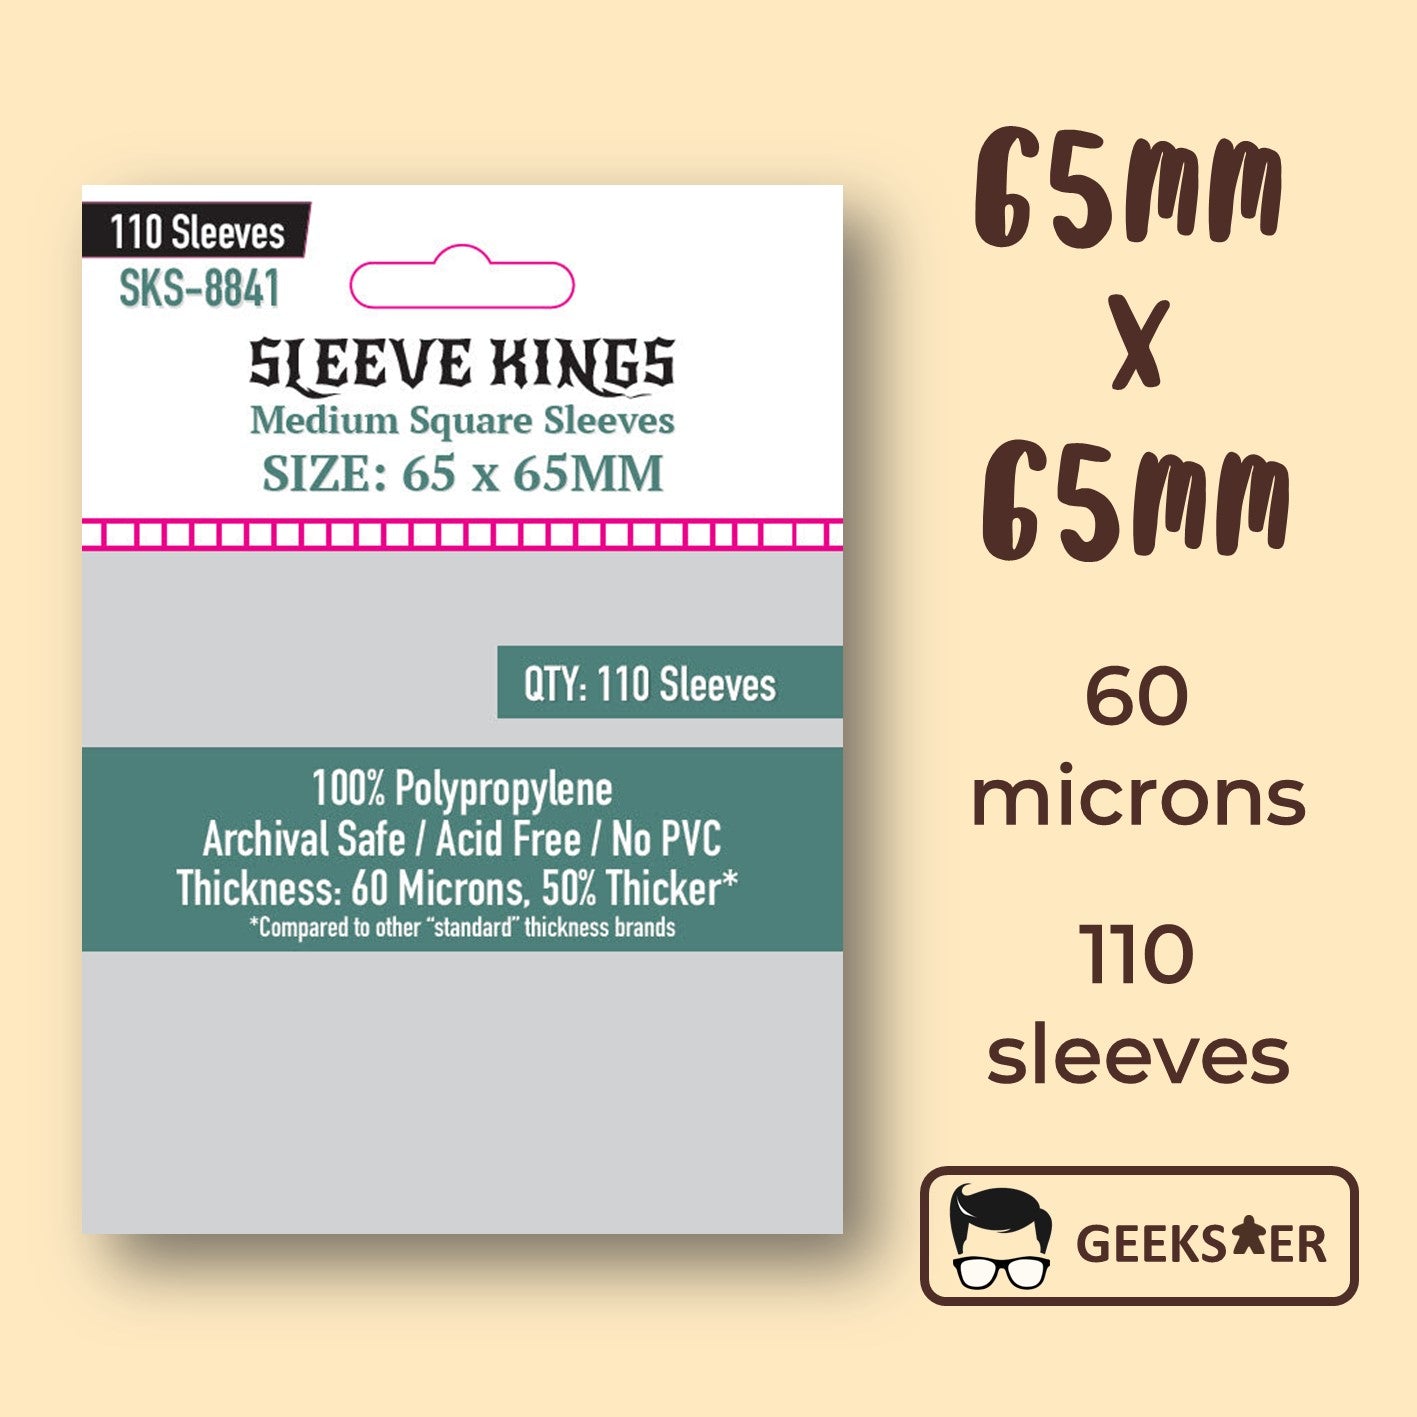 [65 X 65mm] 8841 Sleeve Kings Medium Square